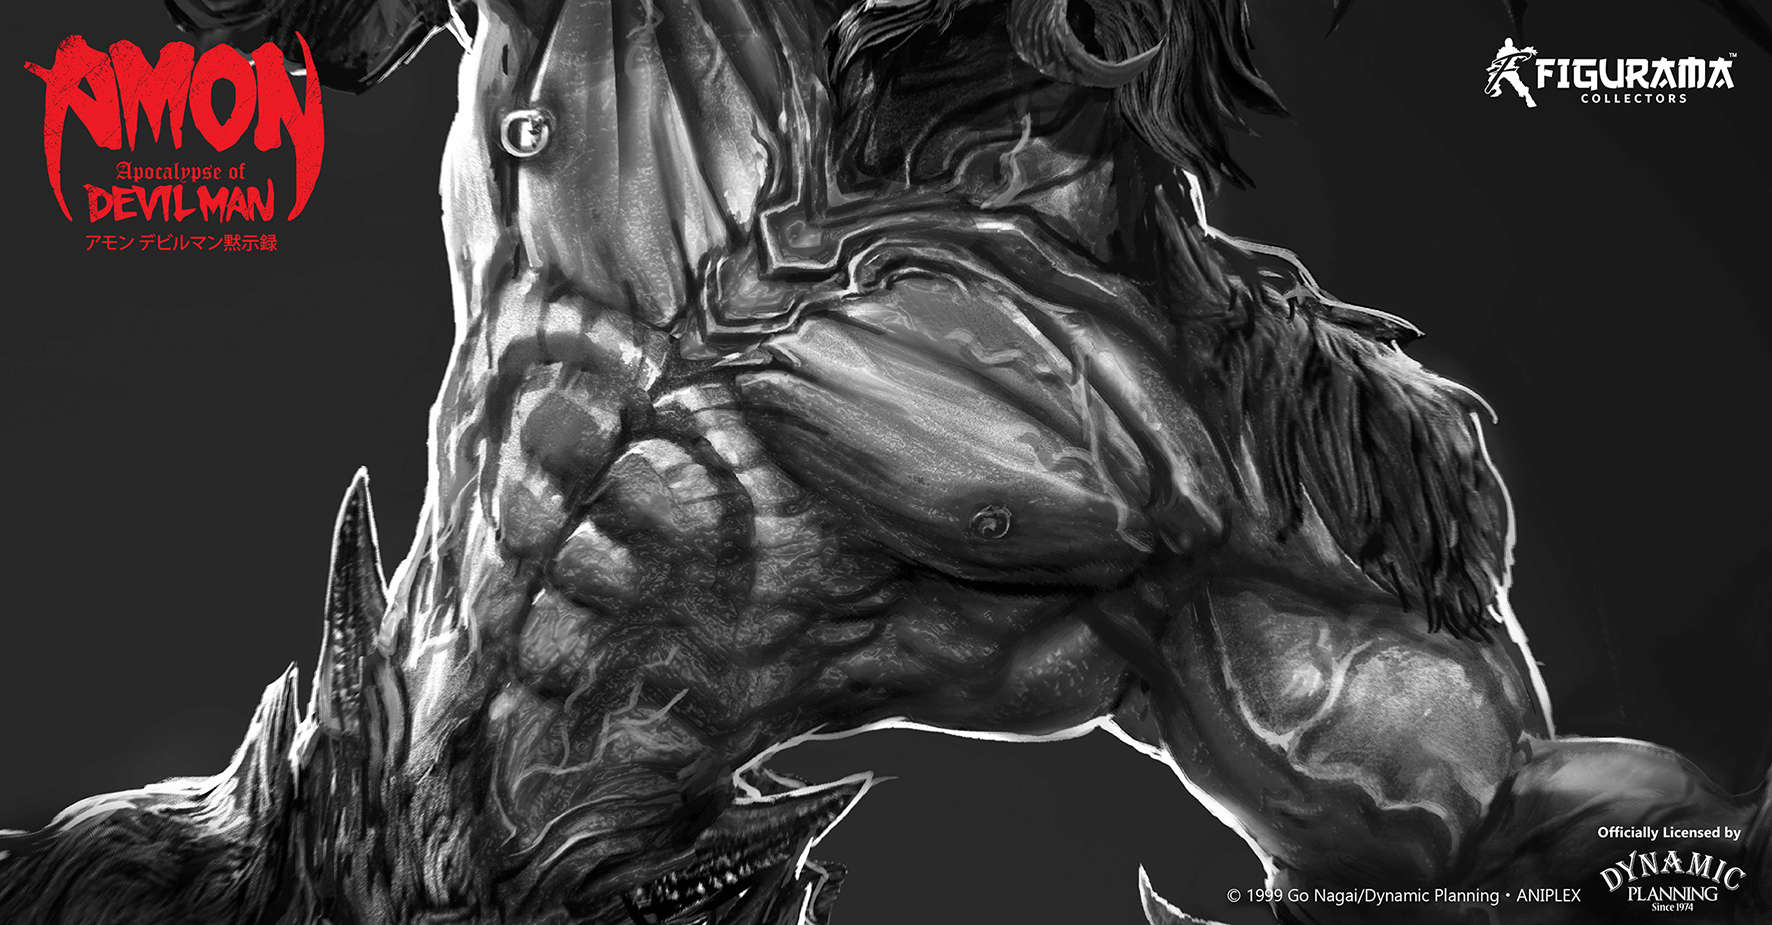 [Figurama Collectors] Amon: The Apocalypse of Devilman Amon_t10